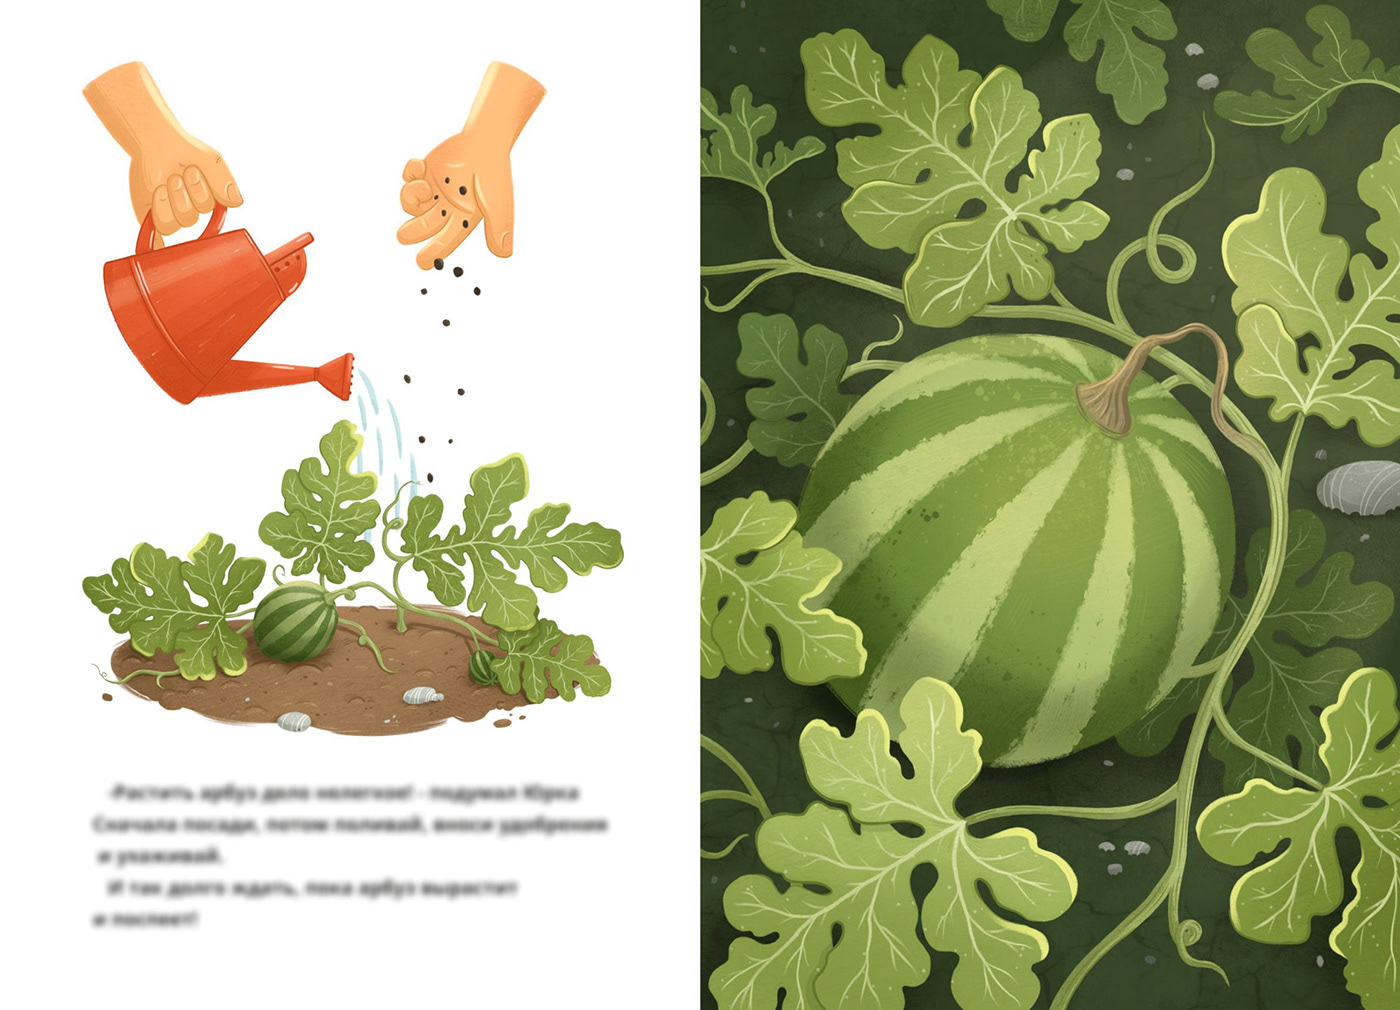 A children's book about a boy planting a watermelon